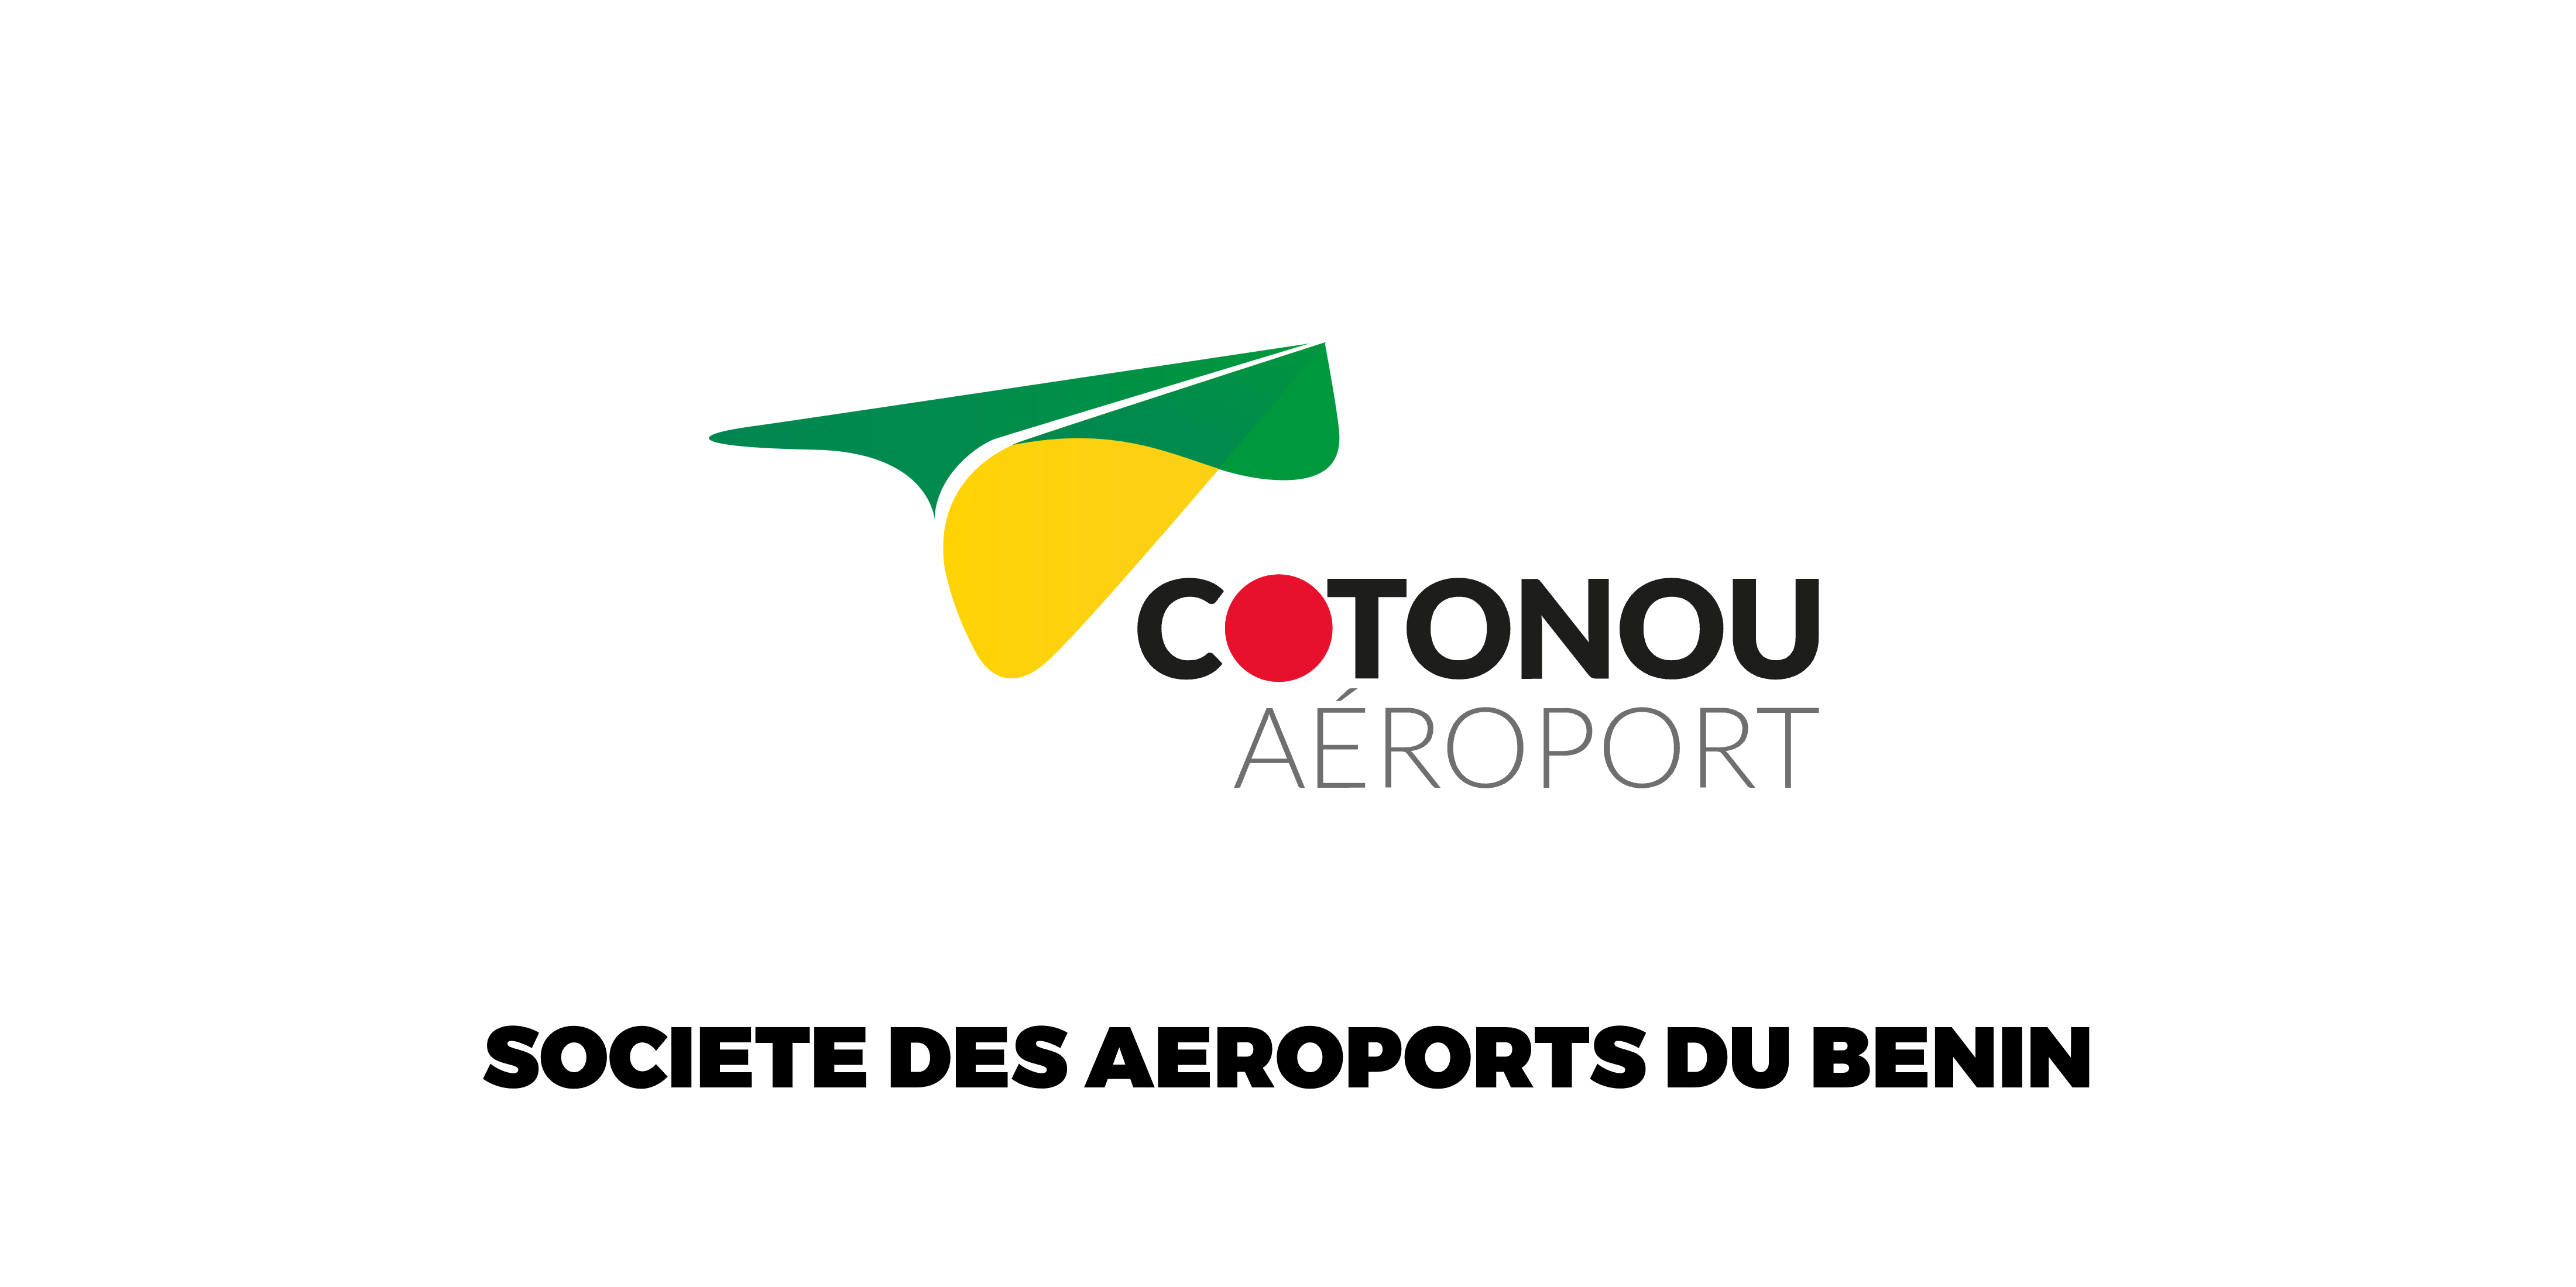 SOCIETE DES AEROPORTS DU BENIN